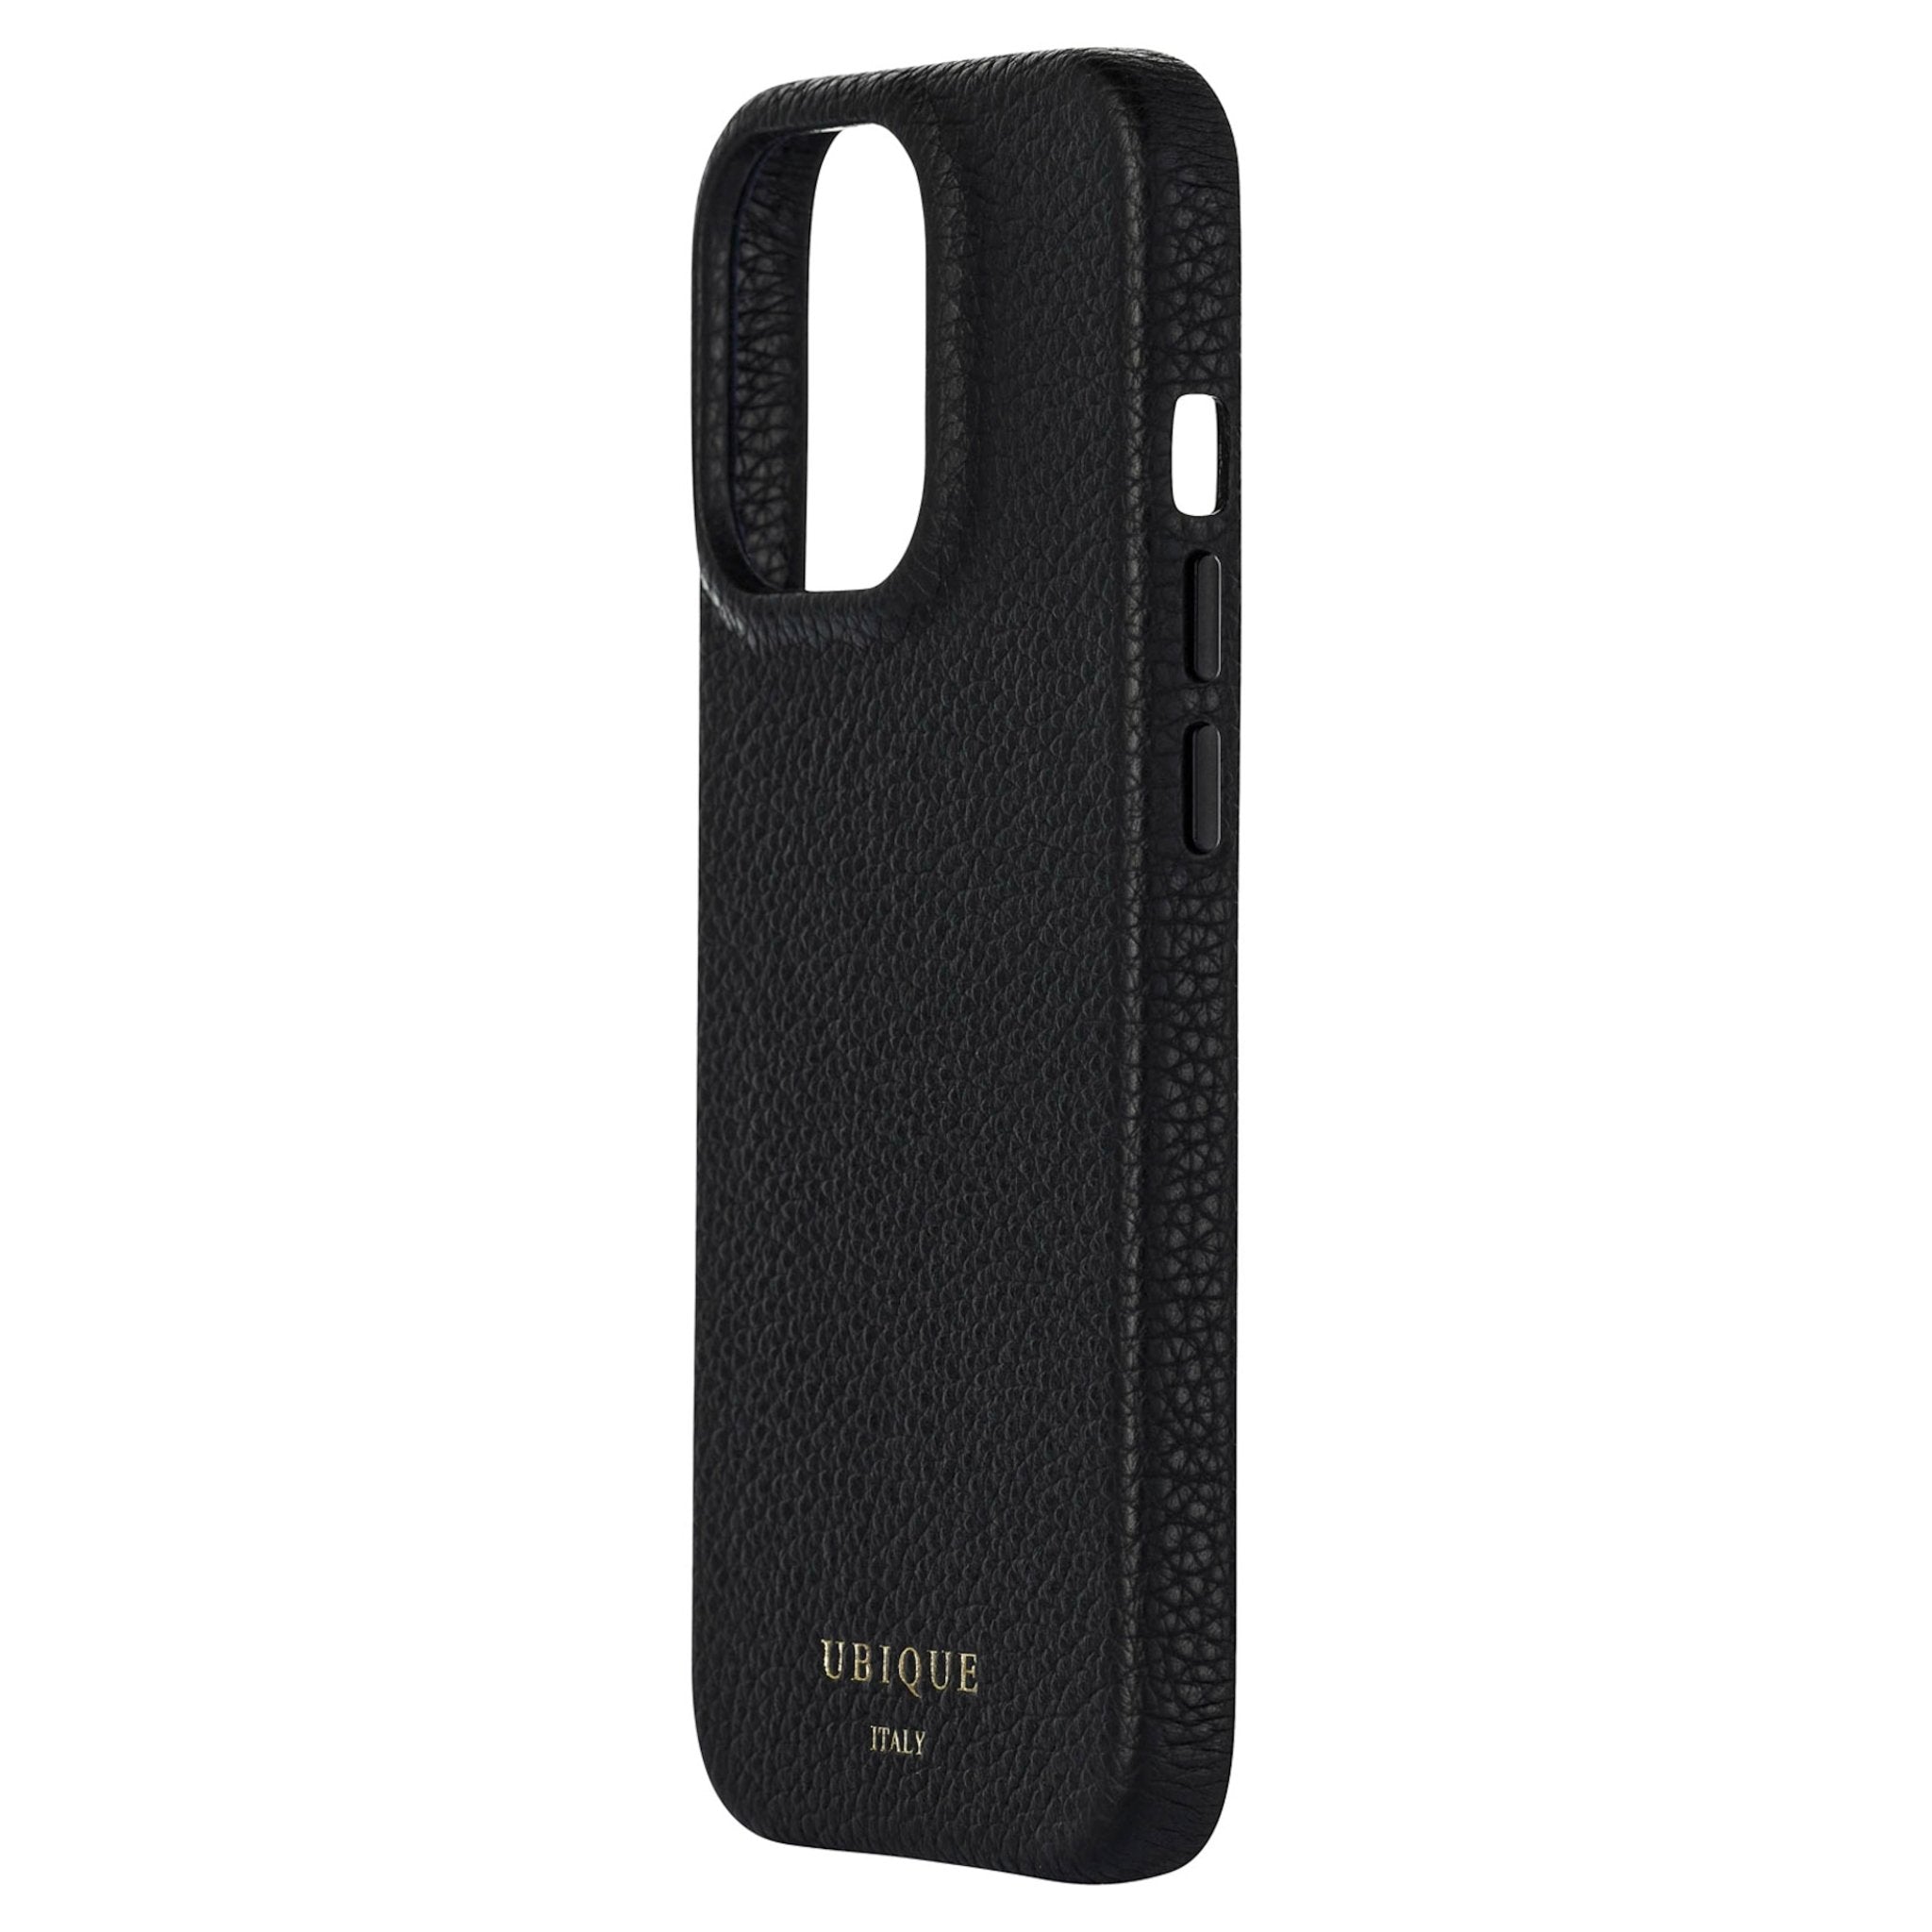 Ubique Italy Luxury iPhone Case 13 Pro Pebble Grain Leather Black Angled